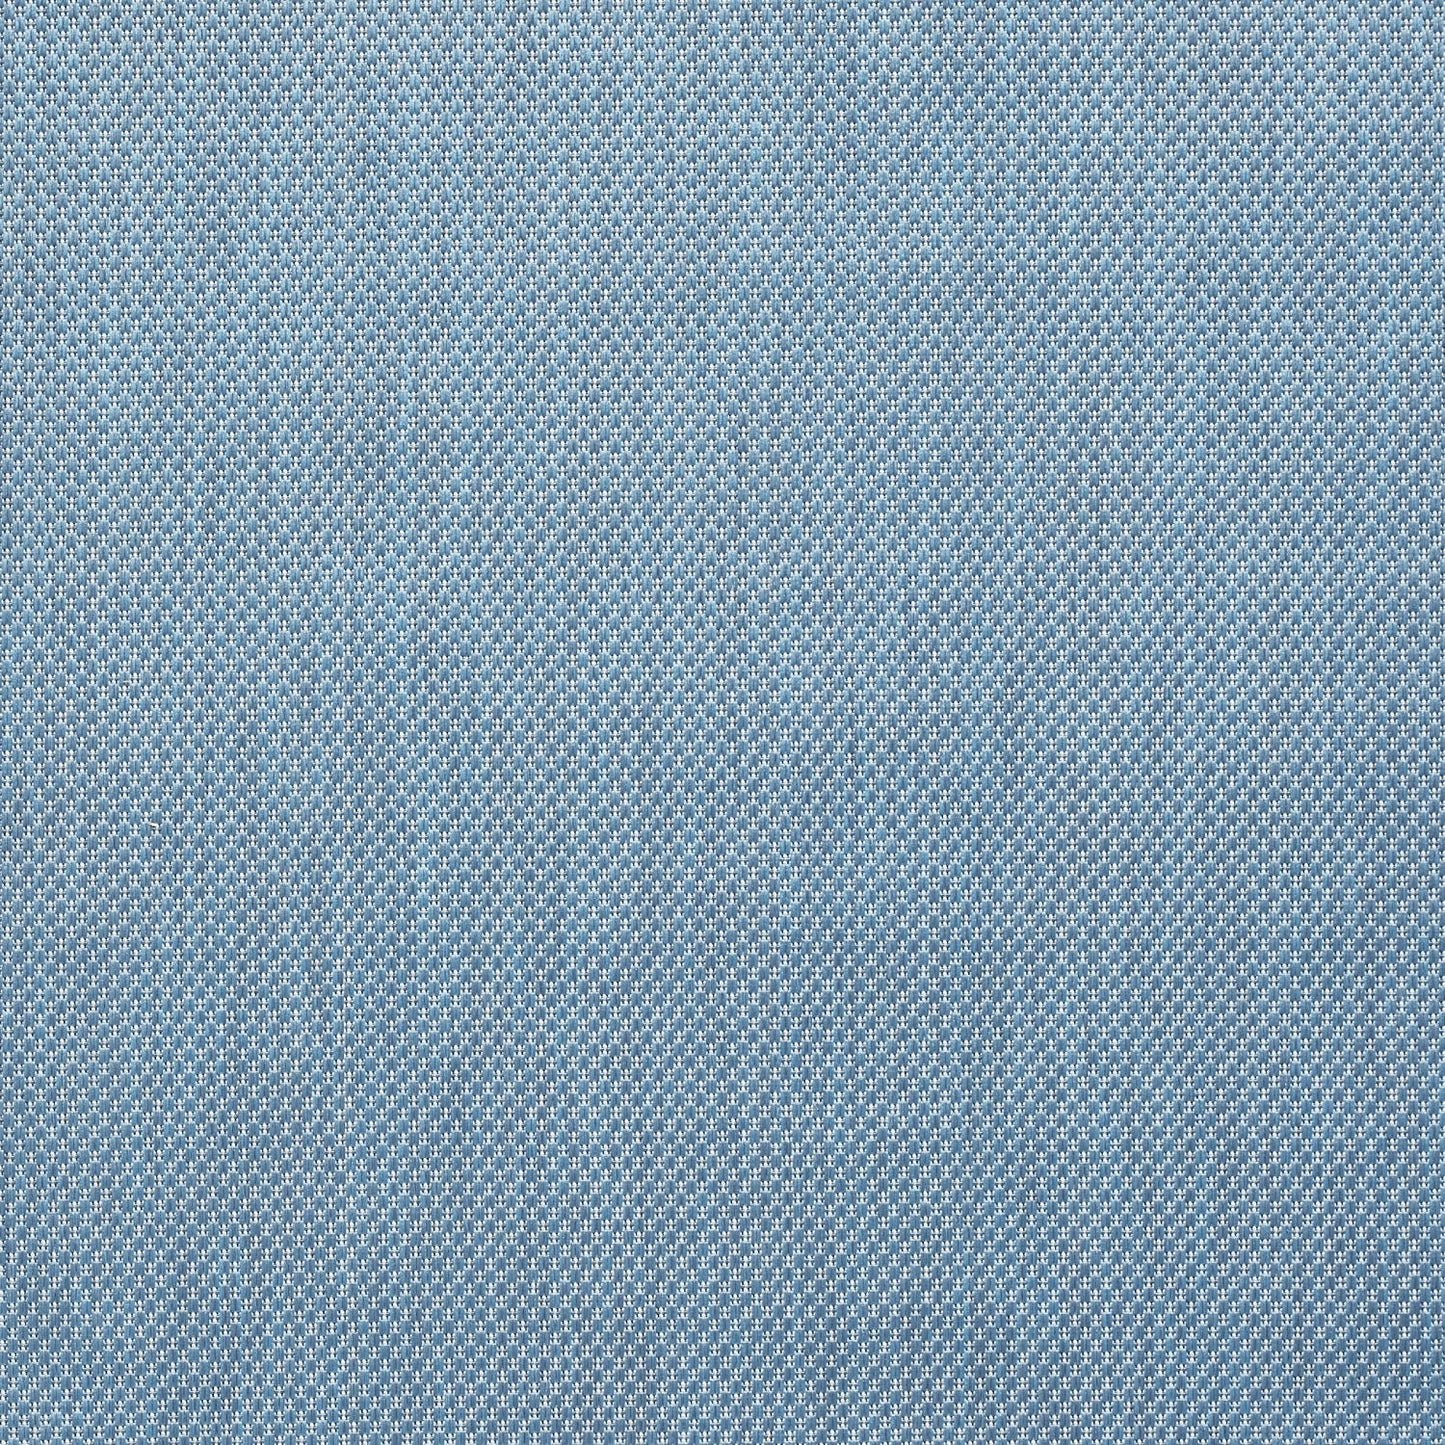 POP Outdoor Blue Flat Weave Plain Rug